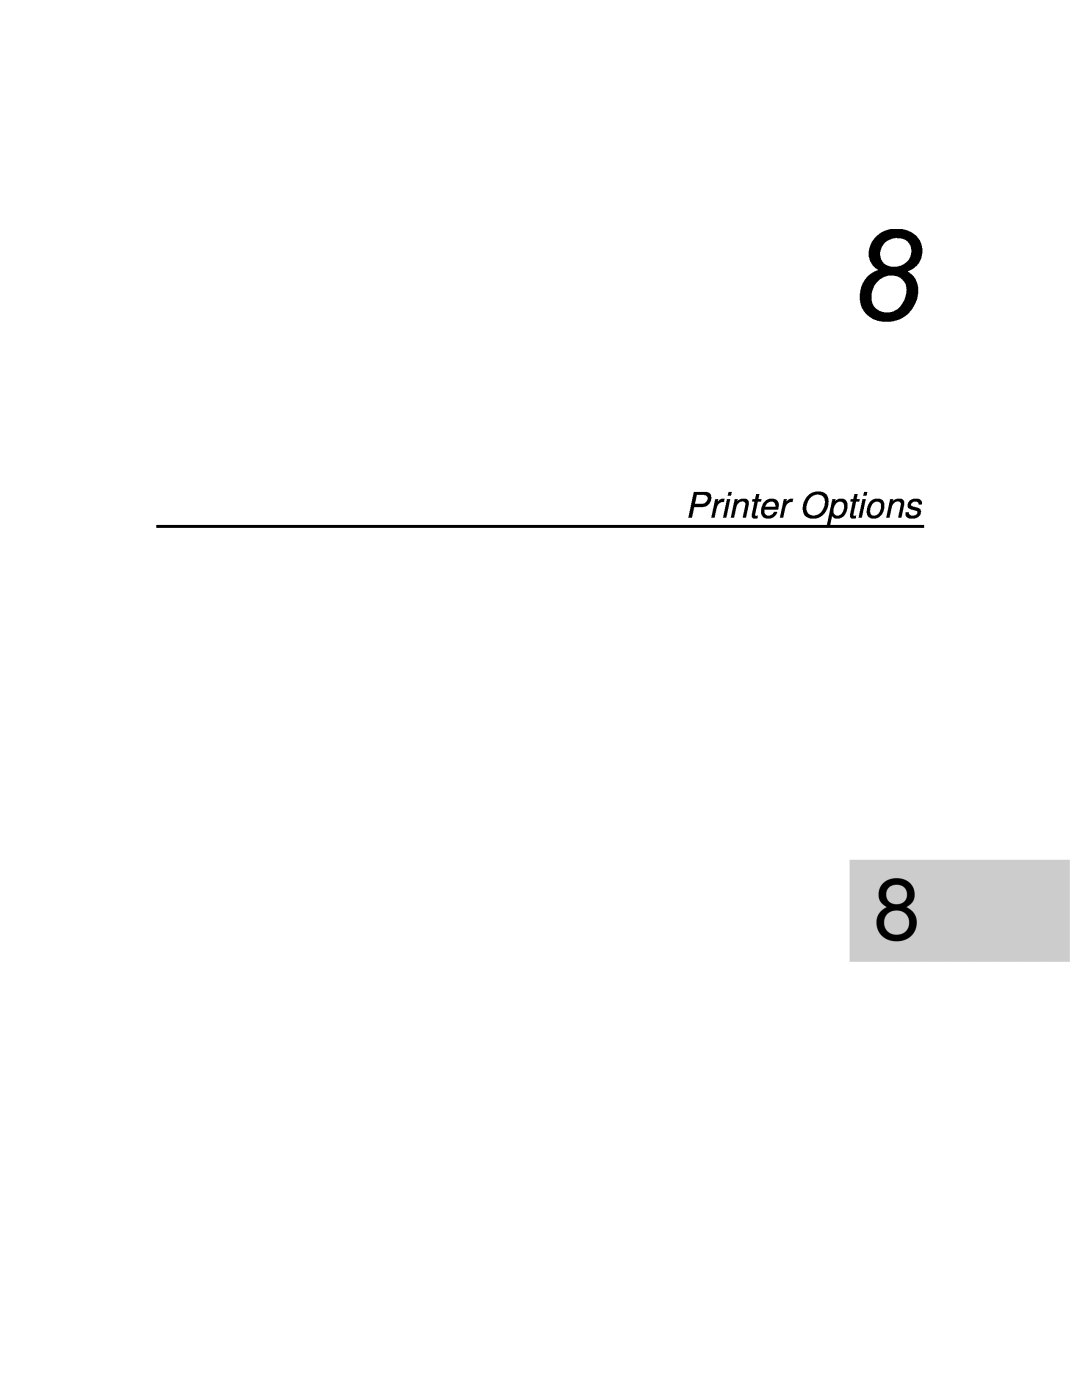 Xerox P12 manual Printer Options 